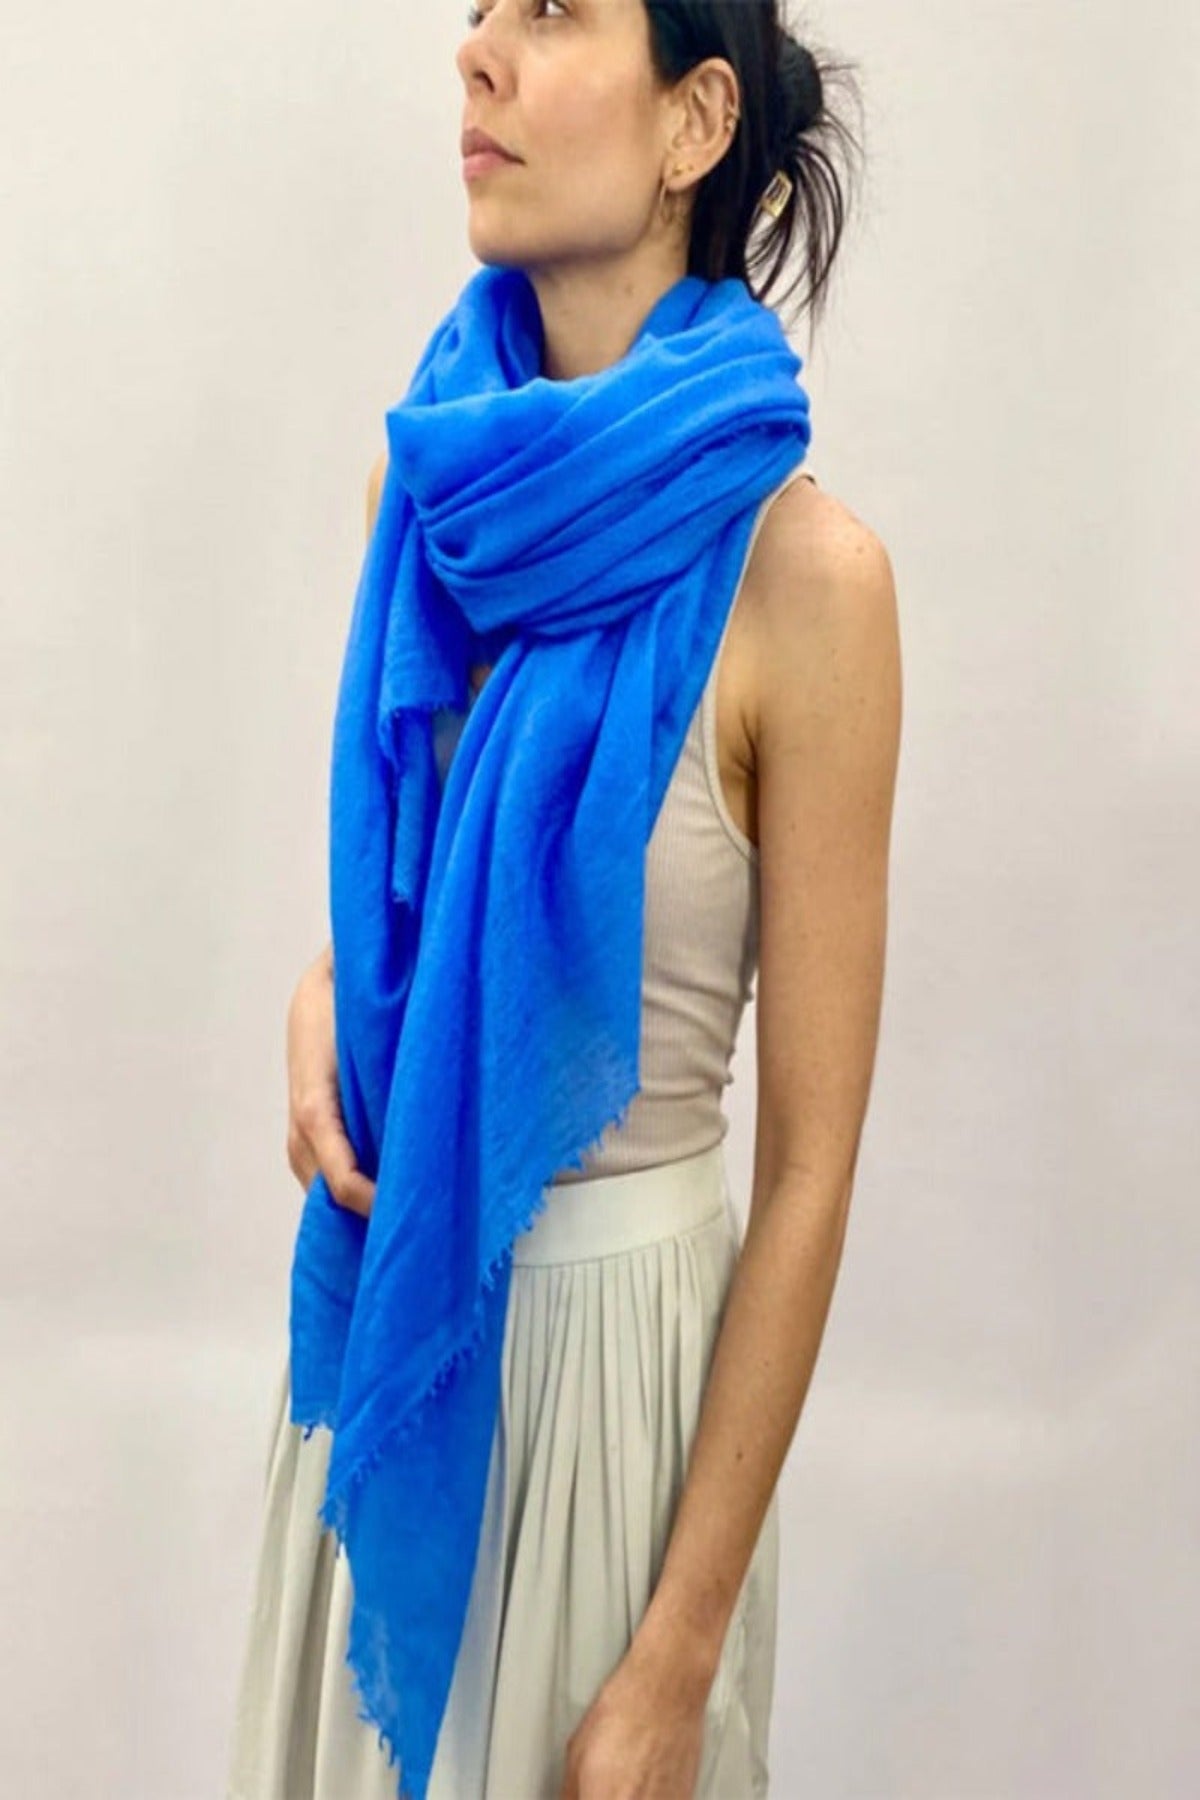 Marmee cornflower blue cashmere scarf side view